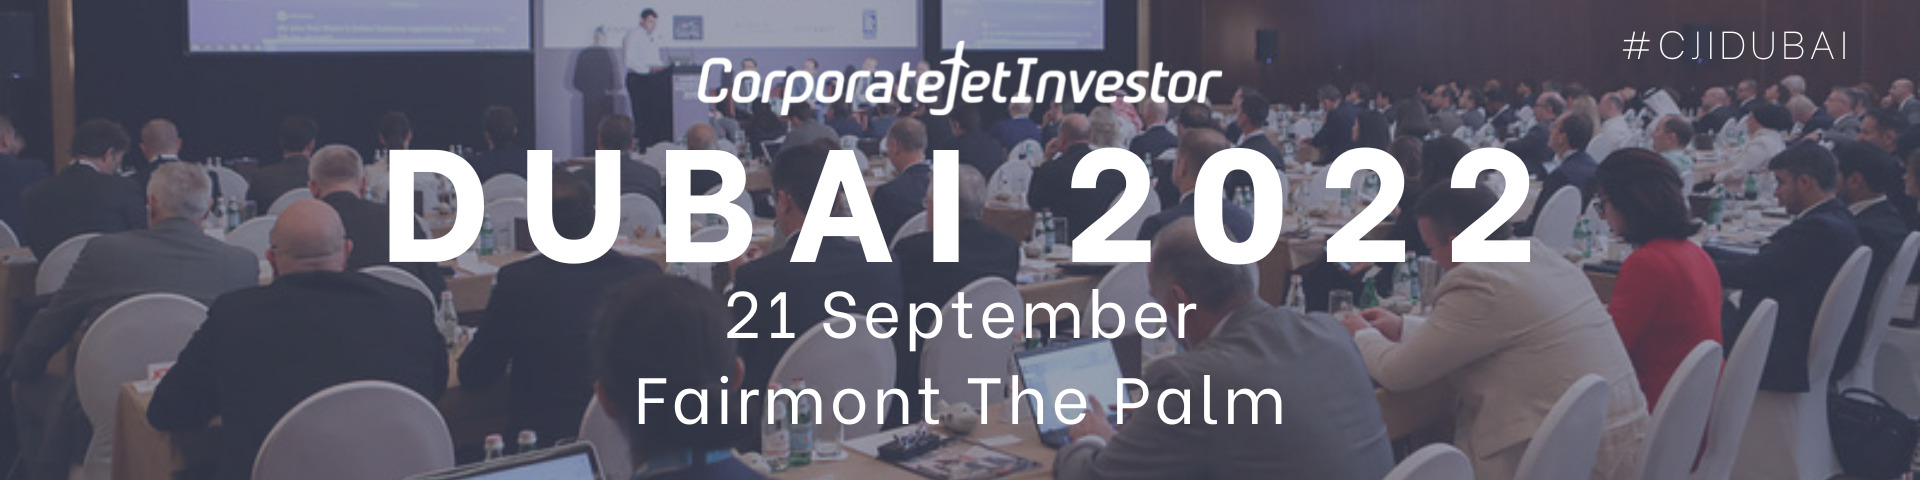 Corporate Jet Investor Dubai 2022